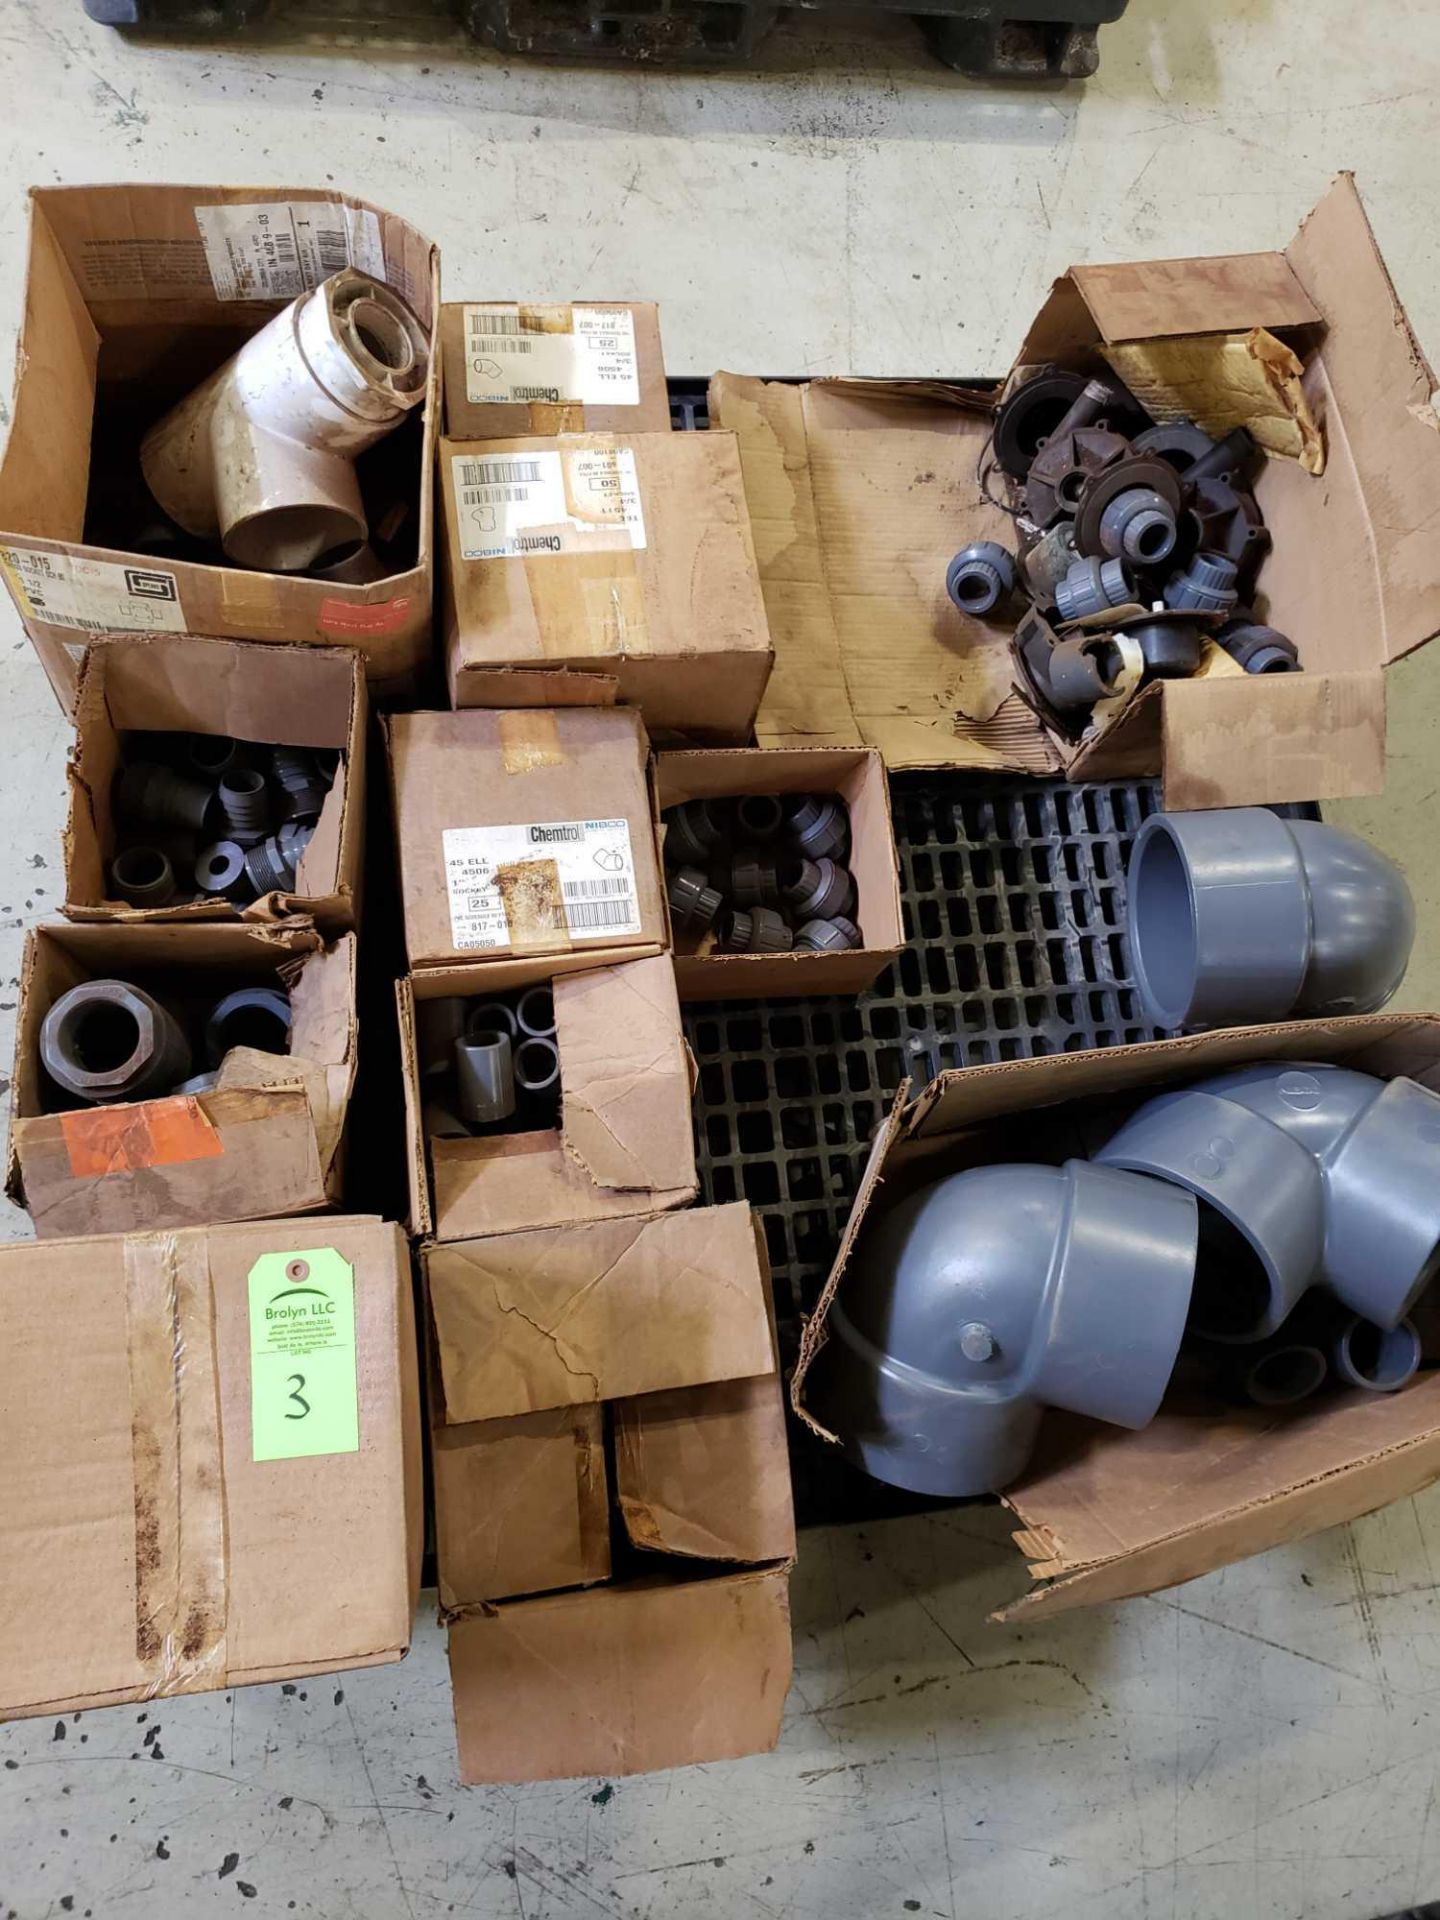 Pallet of assorted plumbing components.